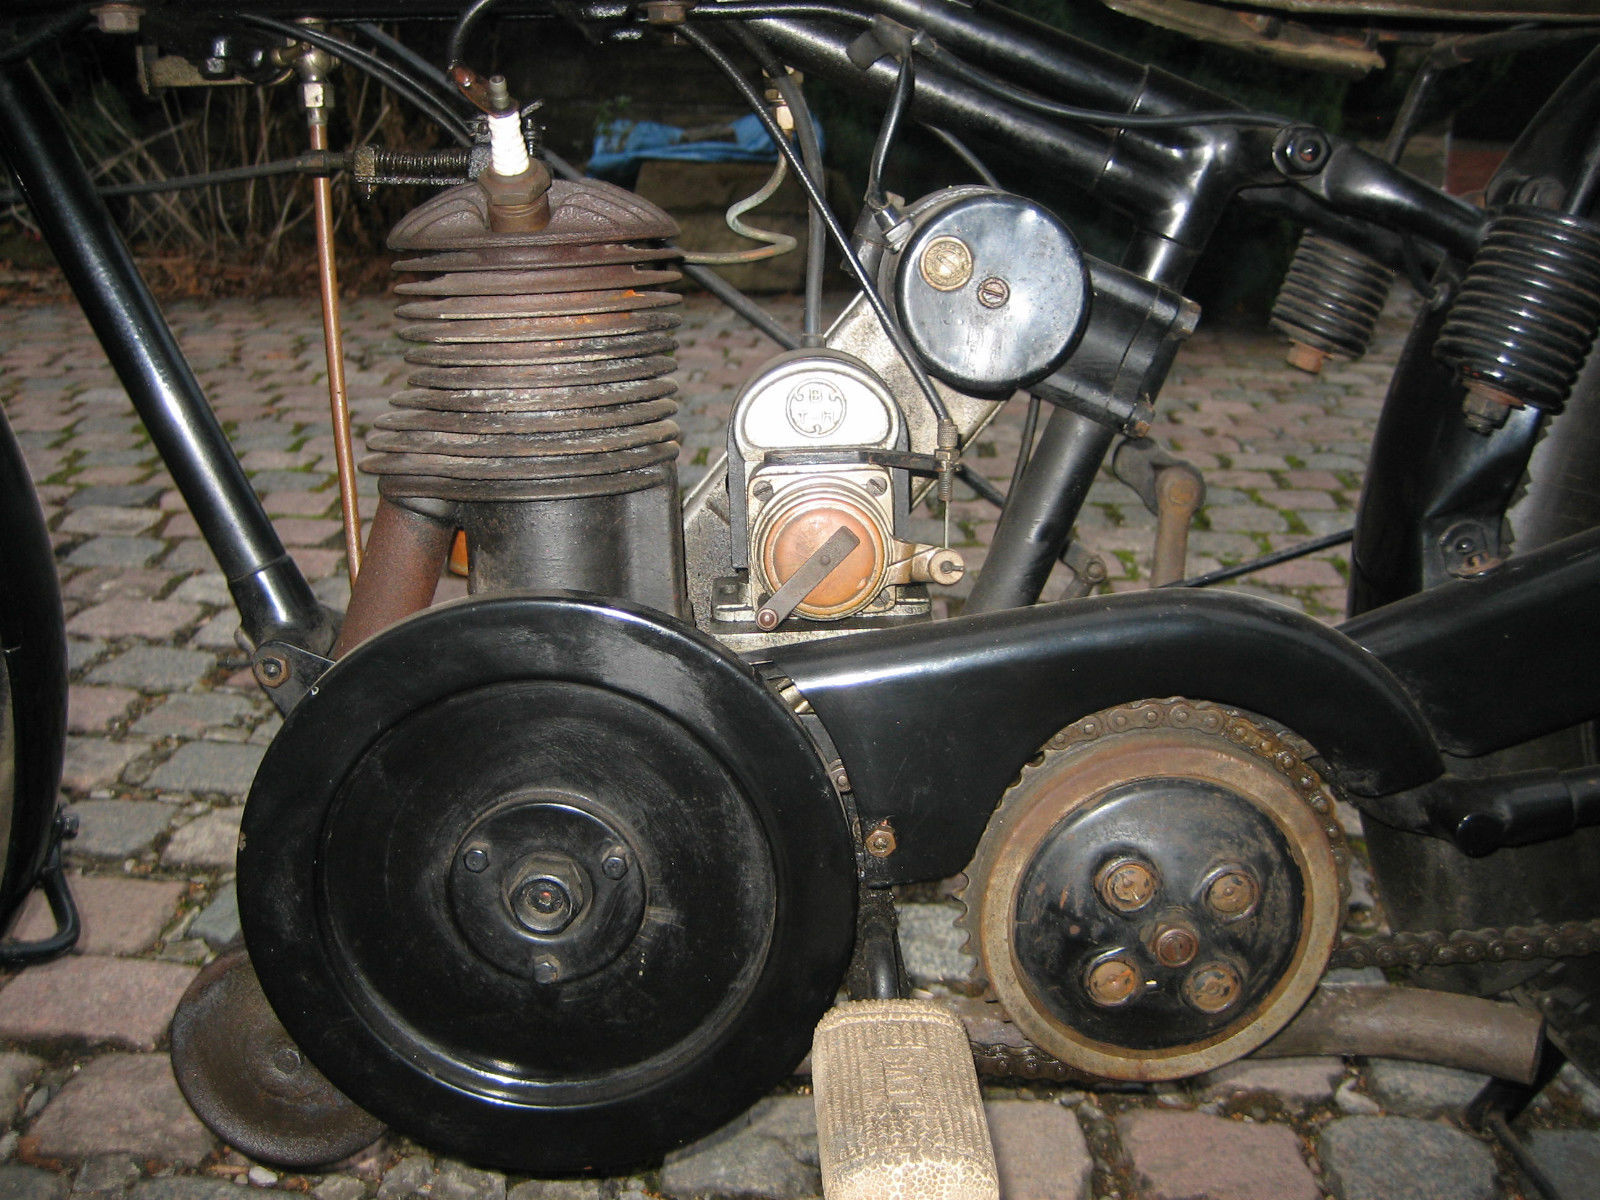 1928 levis model k2 motorcycle